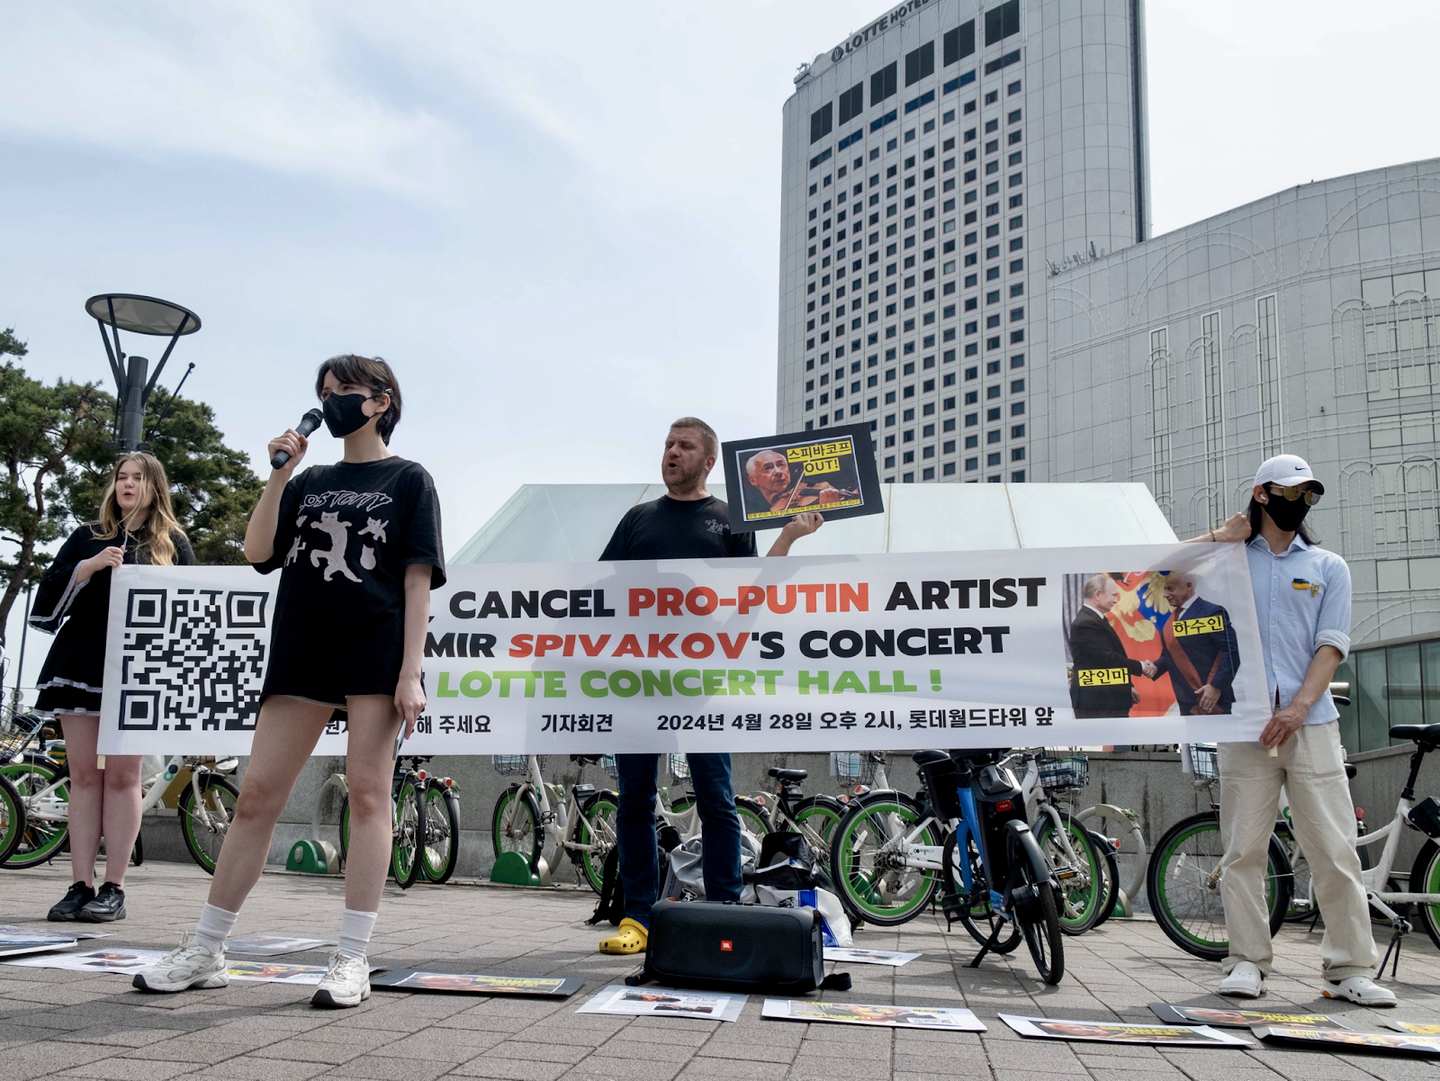 boycott Russian culture music